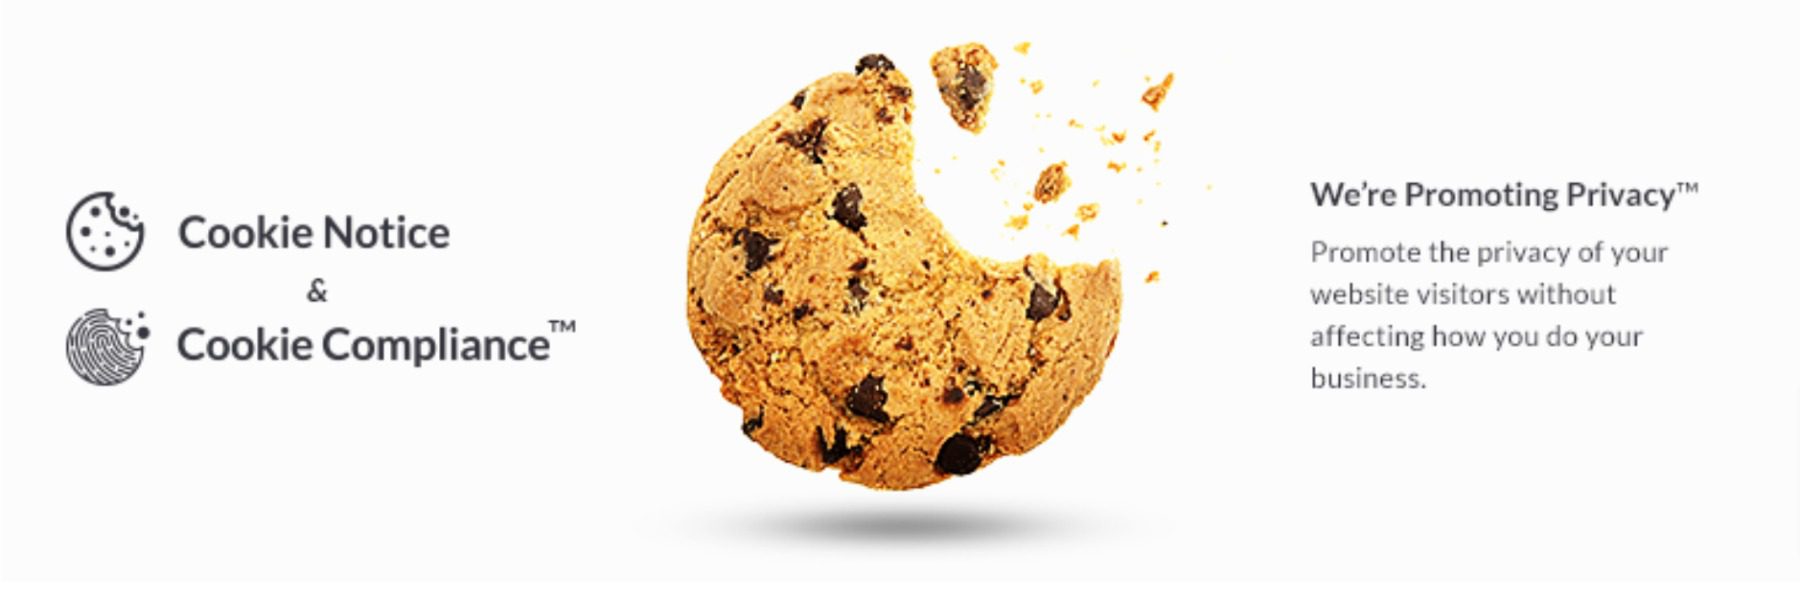 Cookie Notice & Cookie Compliance